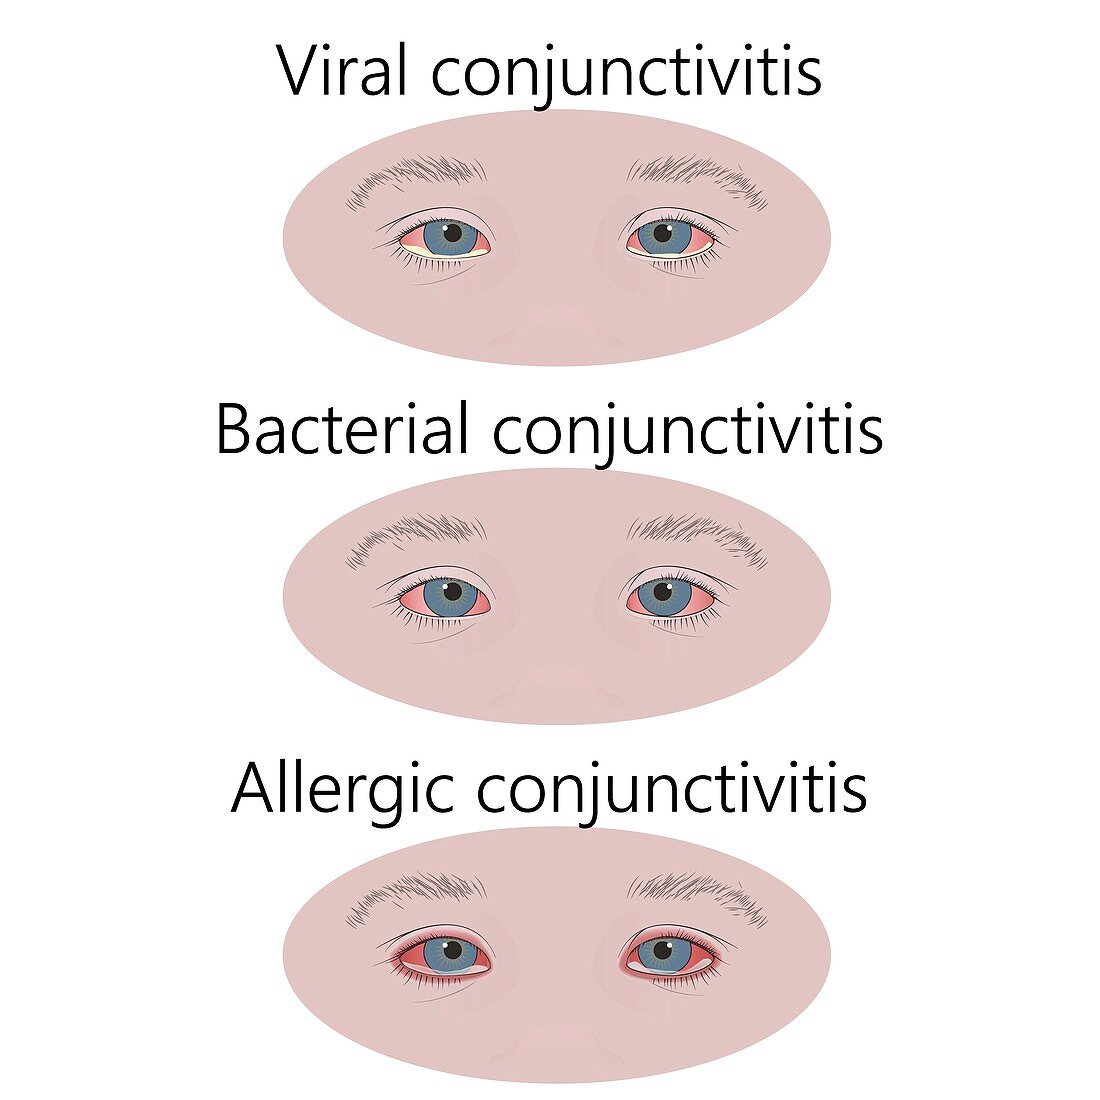 Types of conjunctivitis, illustration